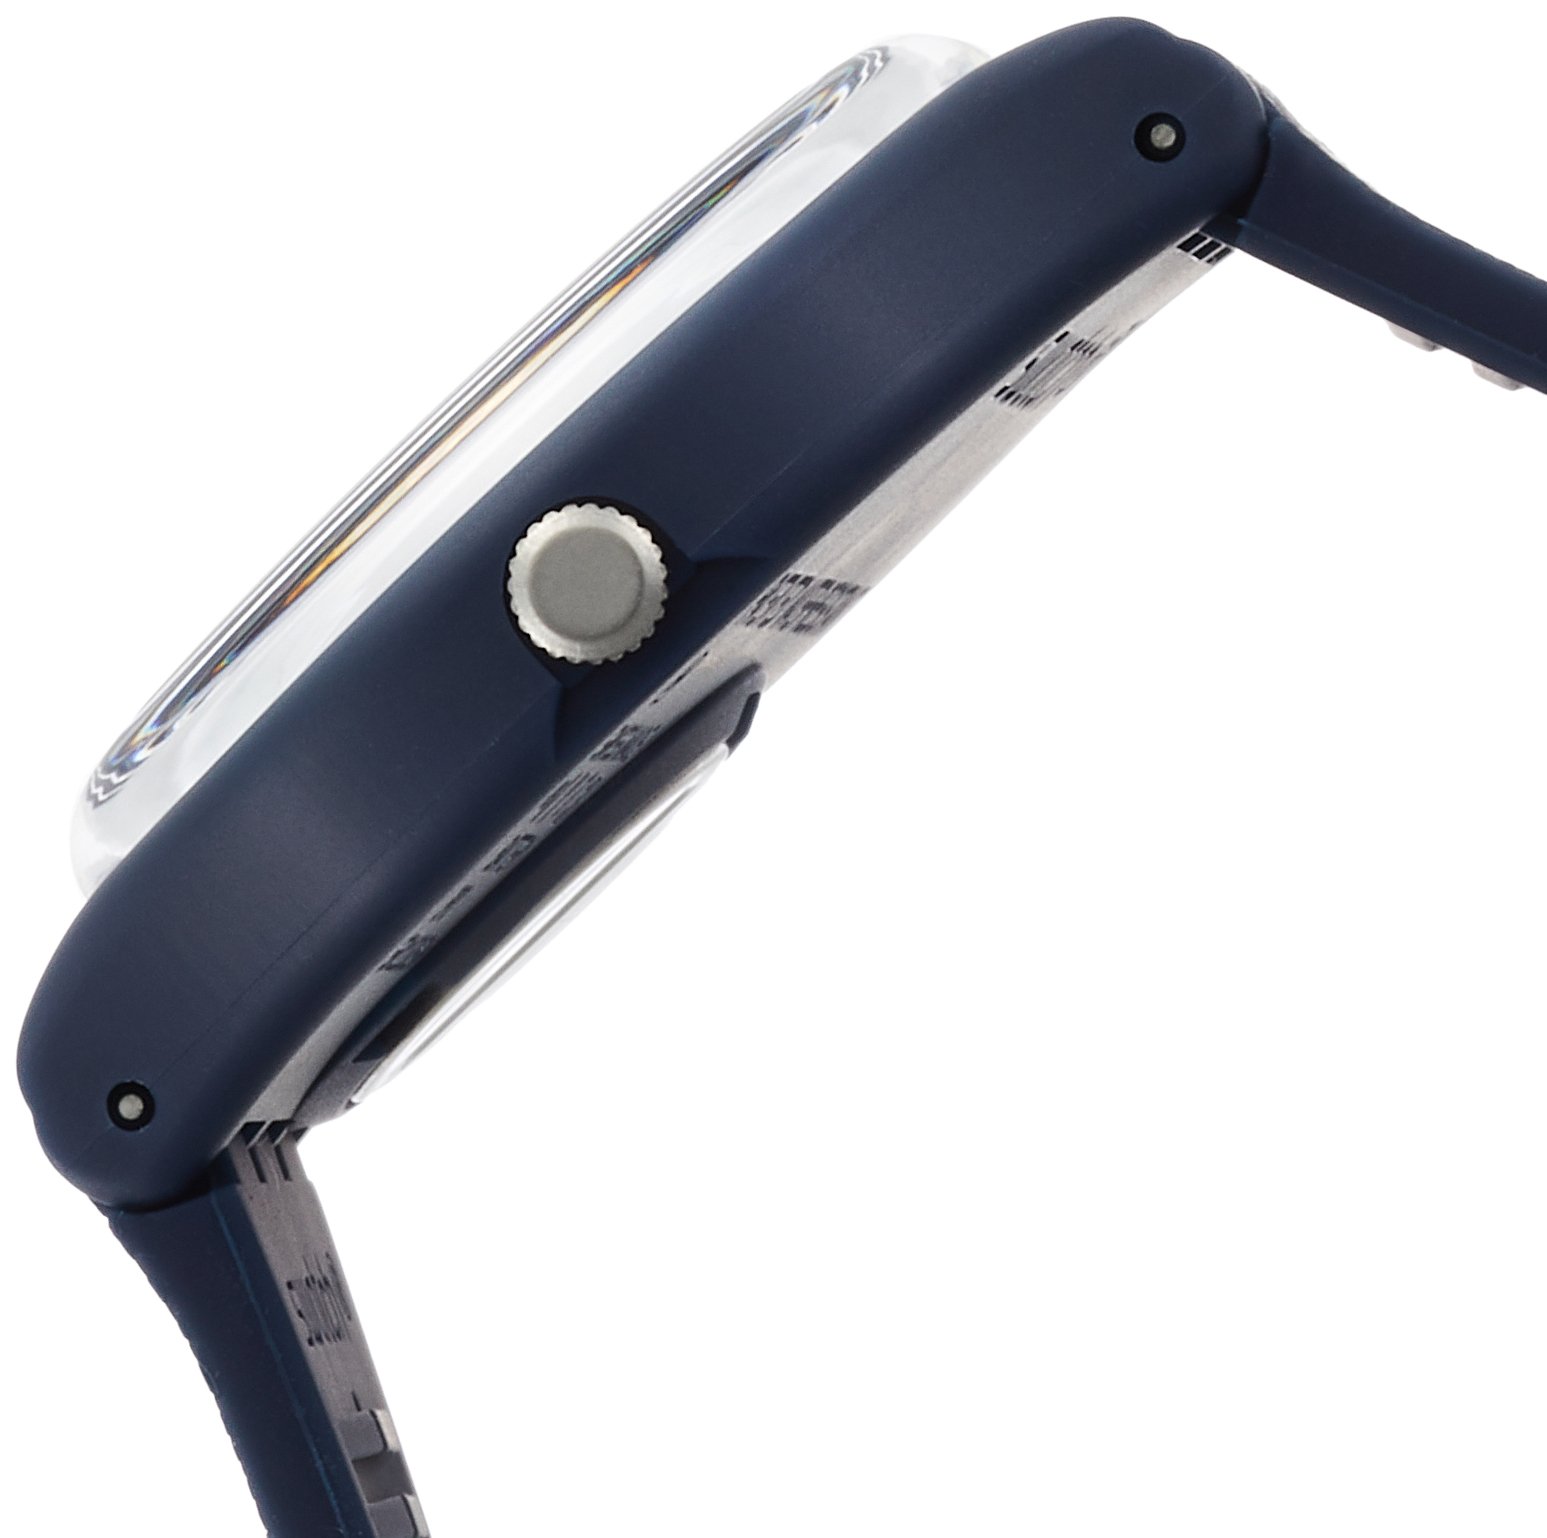 Swatch SIR BLUE Unisex Watch (Model: GN718)